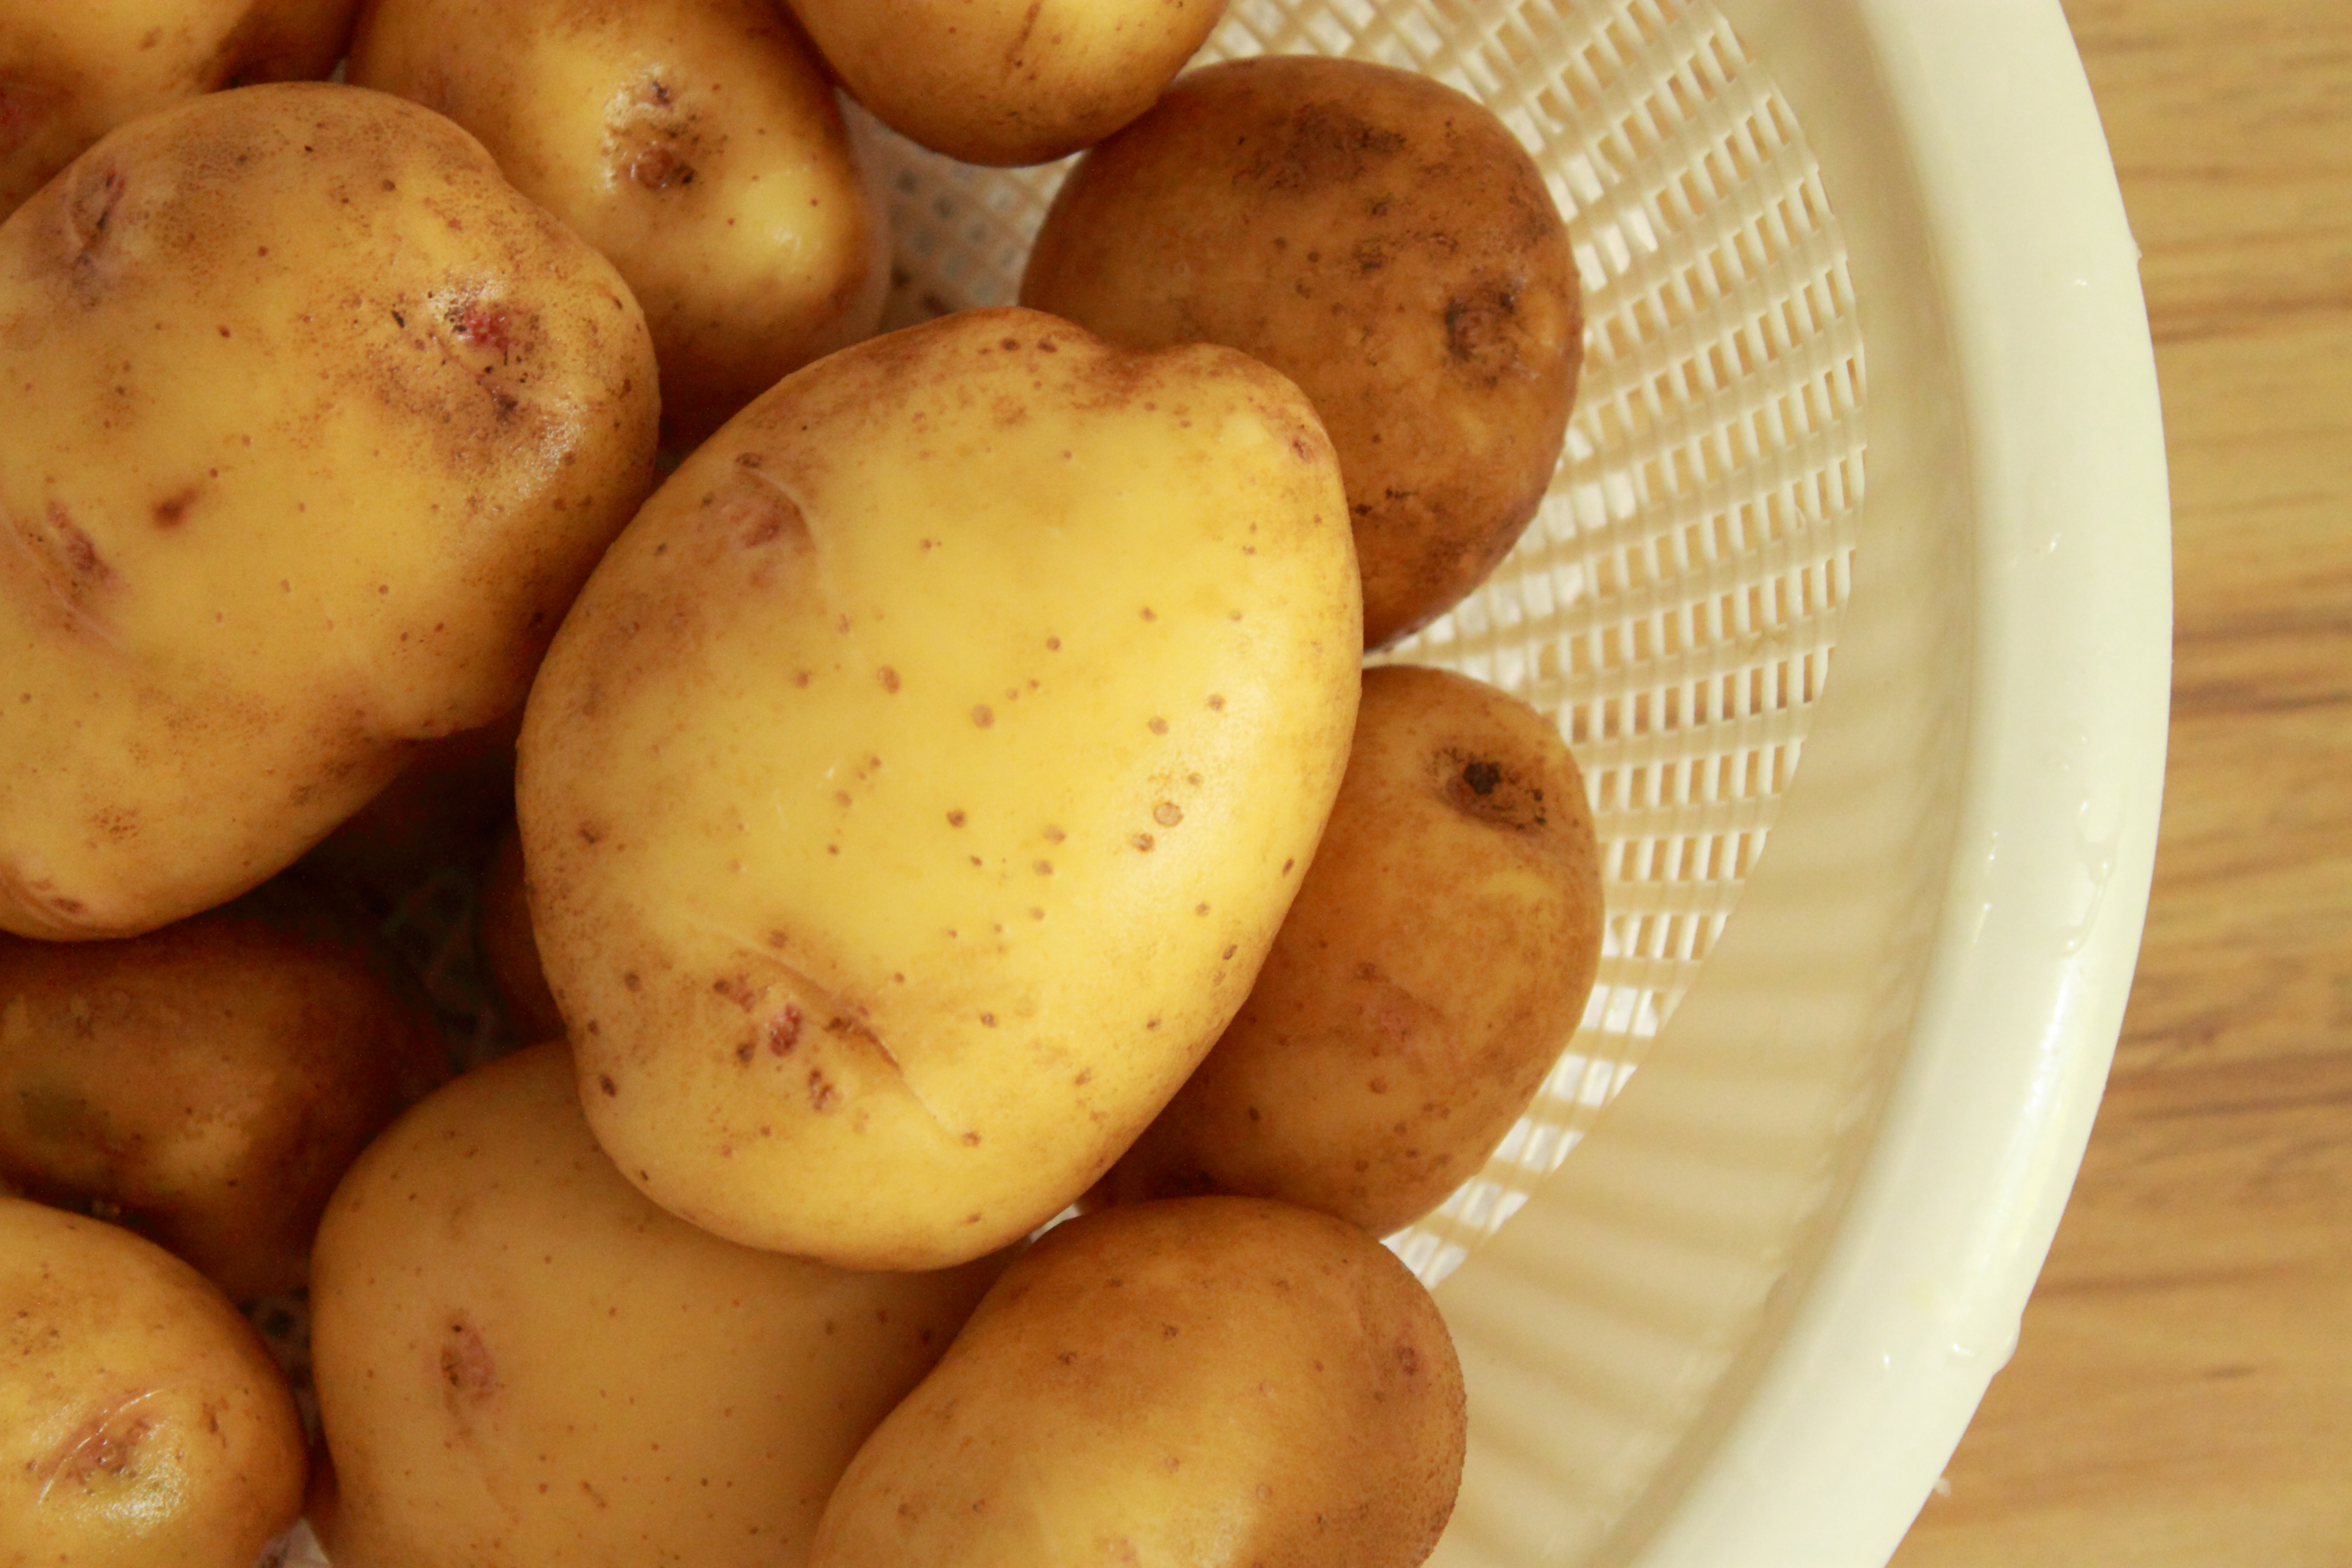 Locally-Grown Baking Potatoes